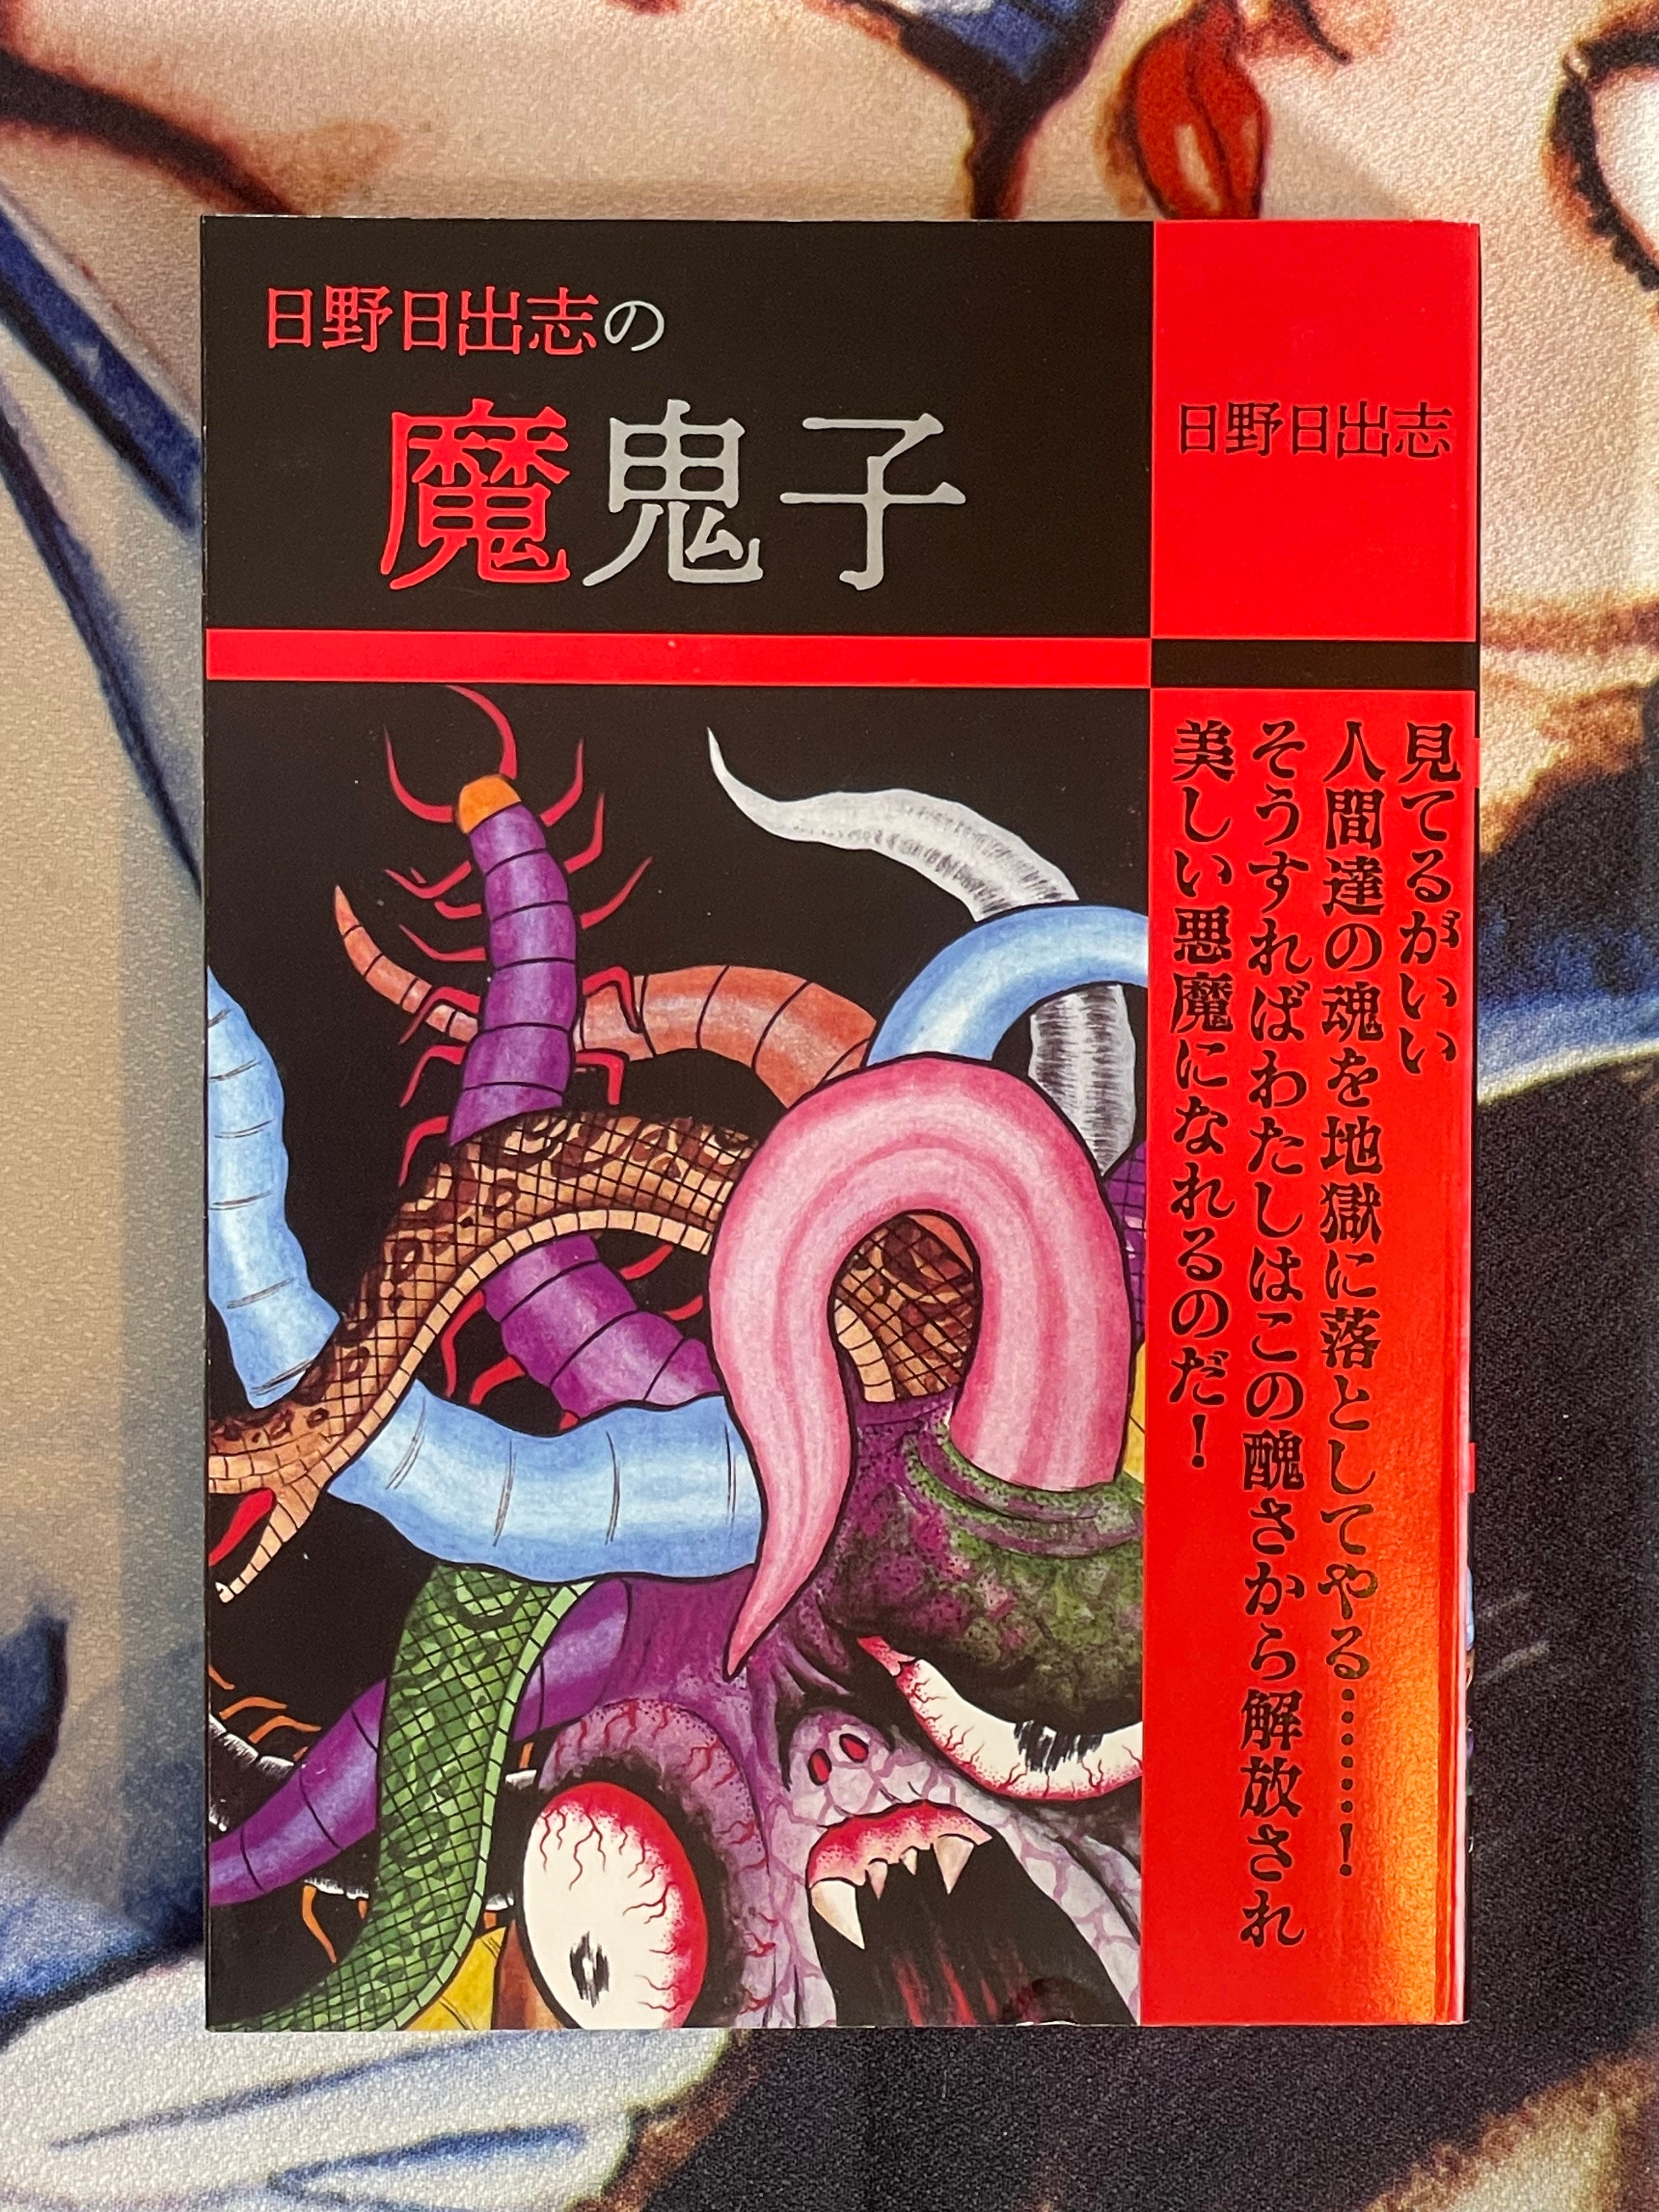 Demon Child by Hideshi Hino (2019) · Japan Book Hunter